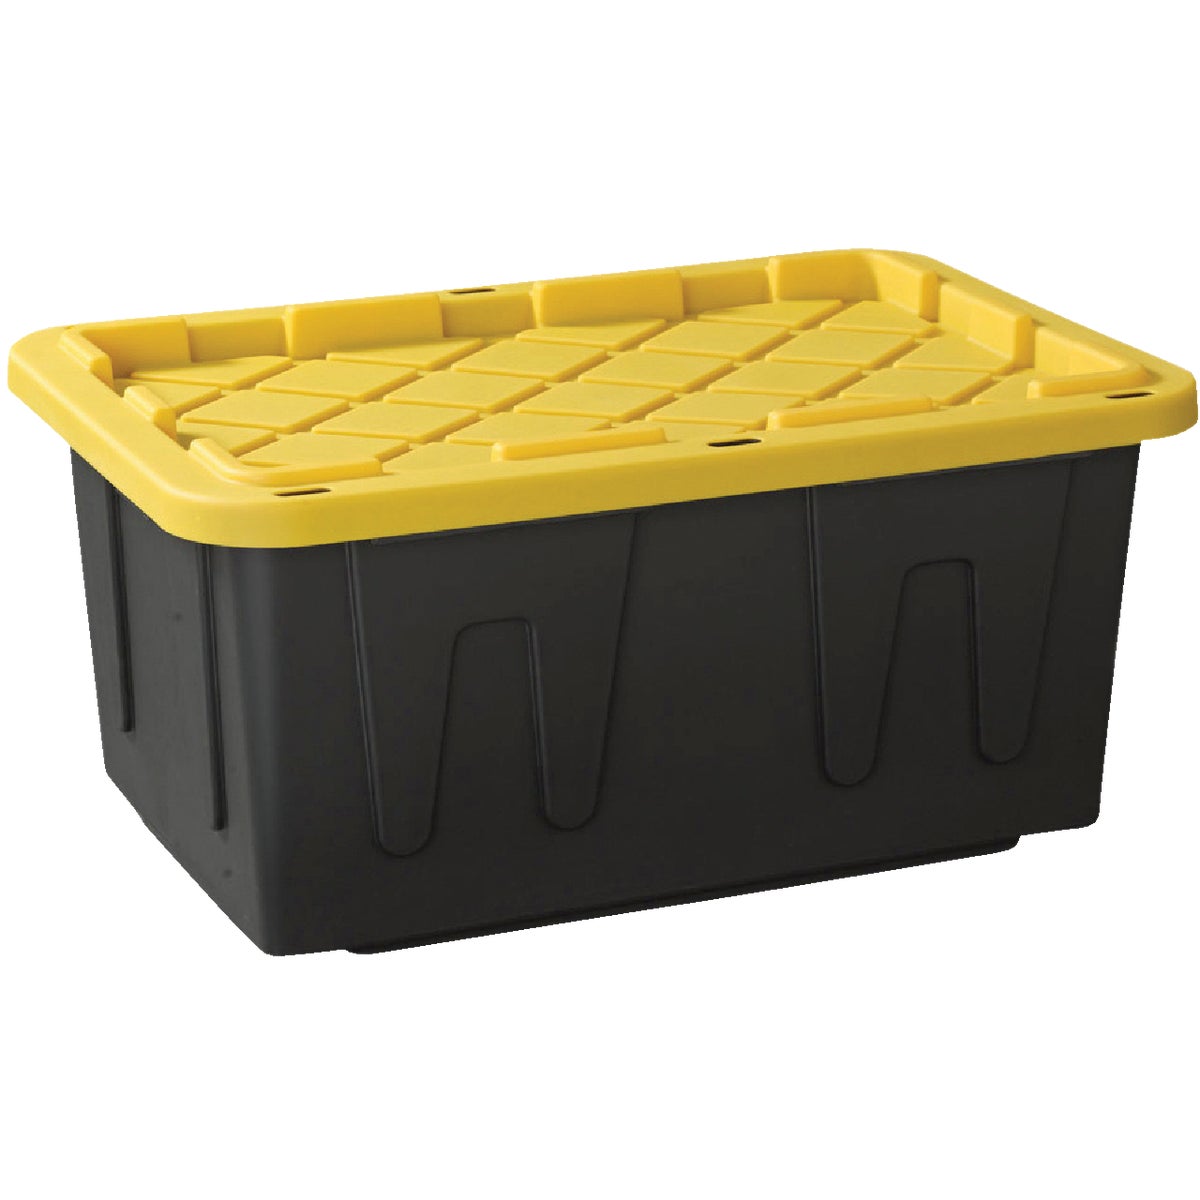 Homz Durabilt 27 Gal. Plastic Storage Tote, Black/Yellow (Set of 4) - image 1 of 2